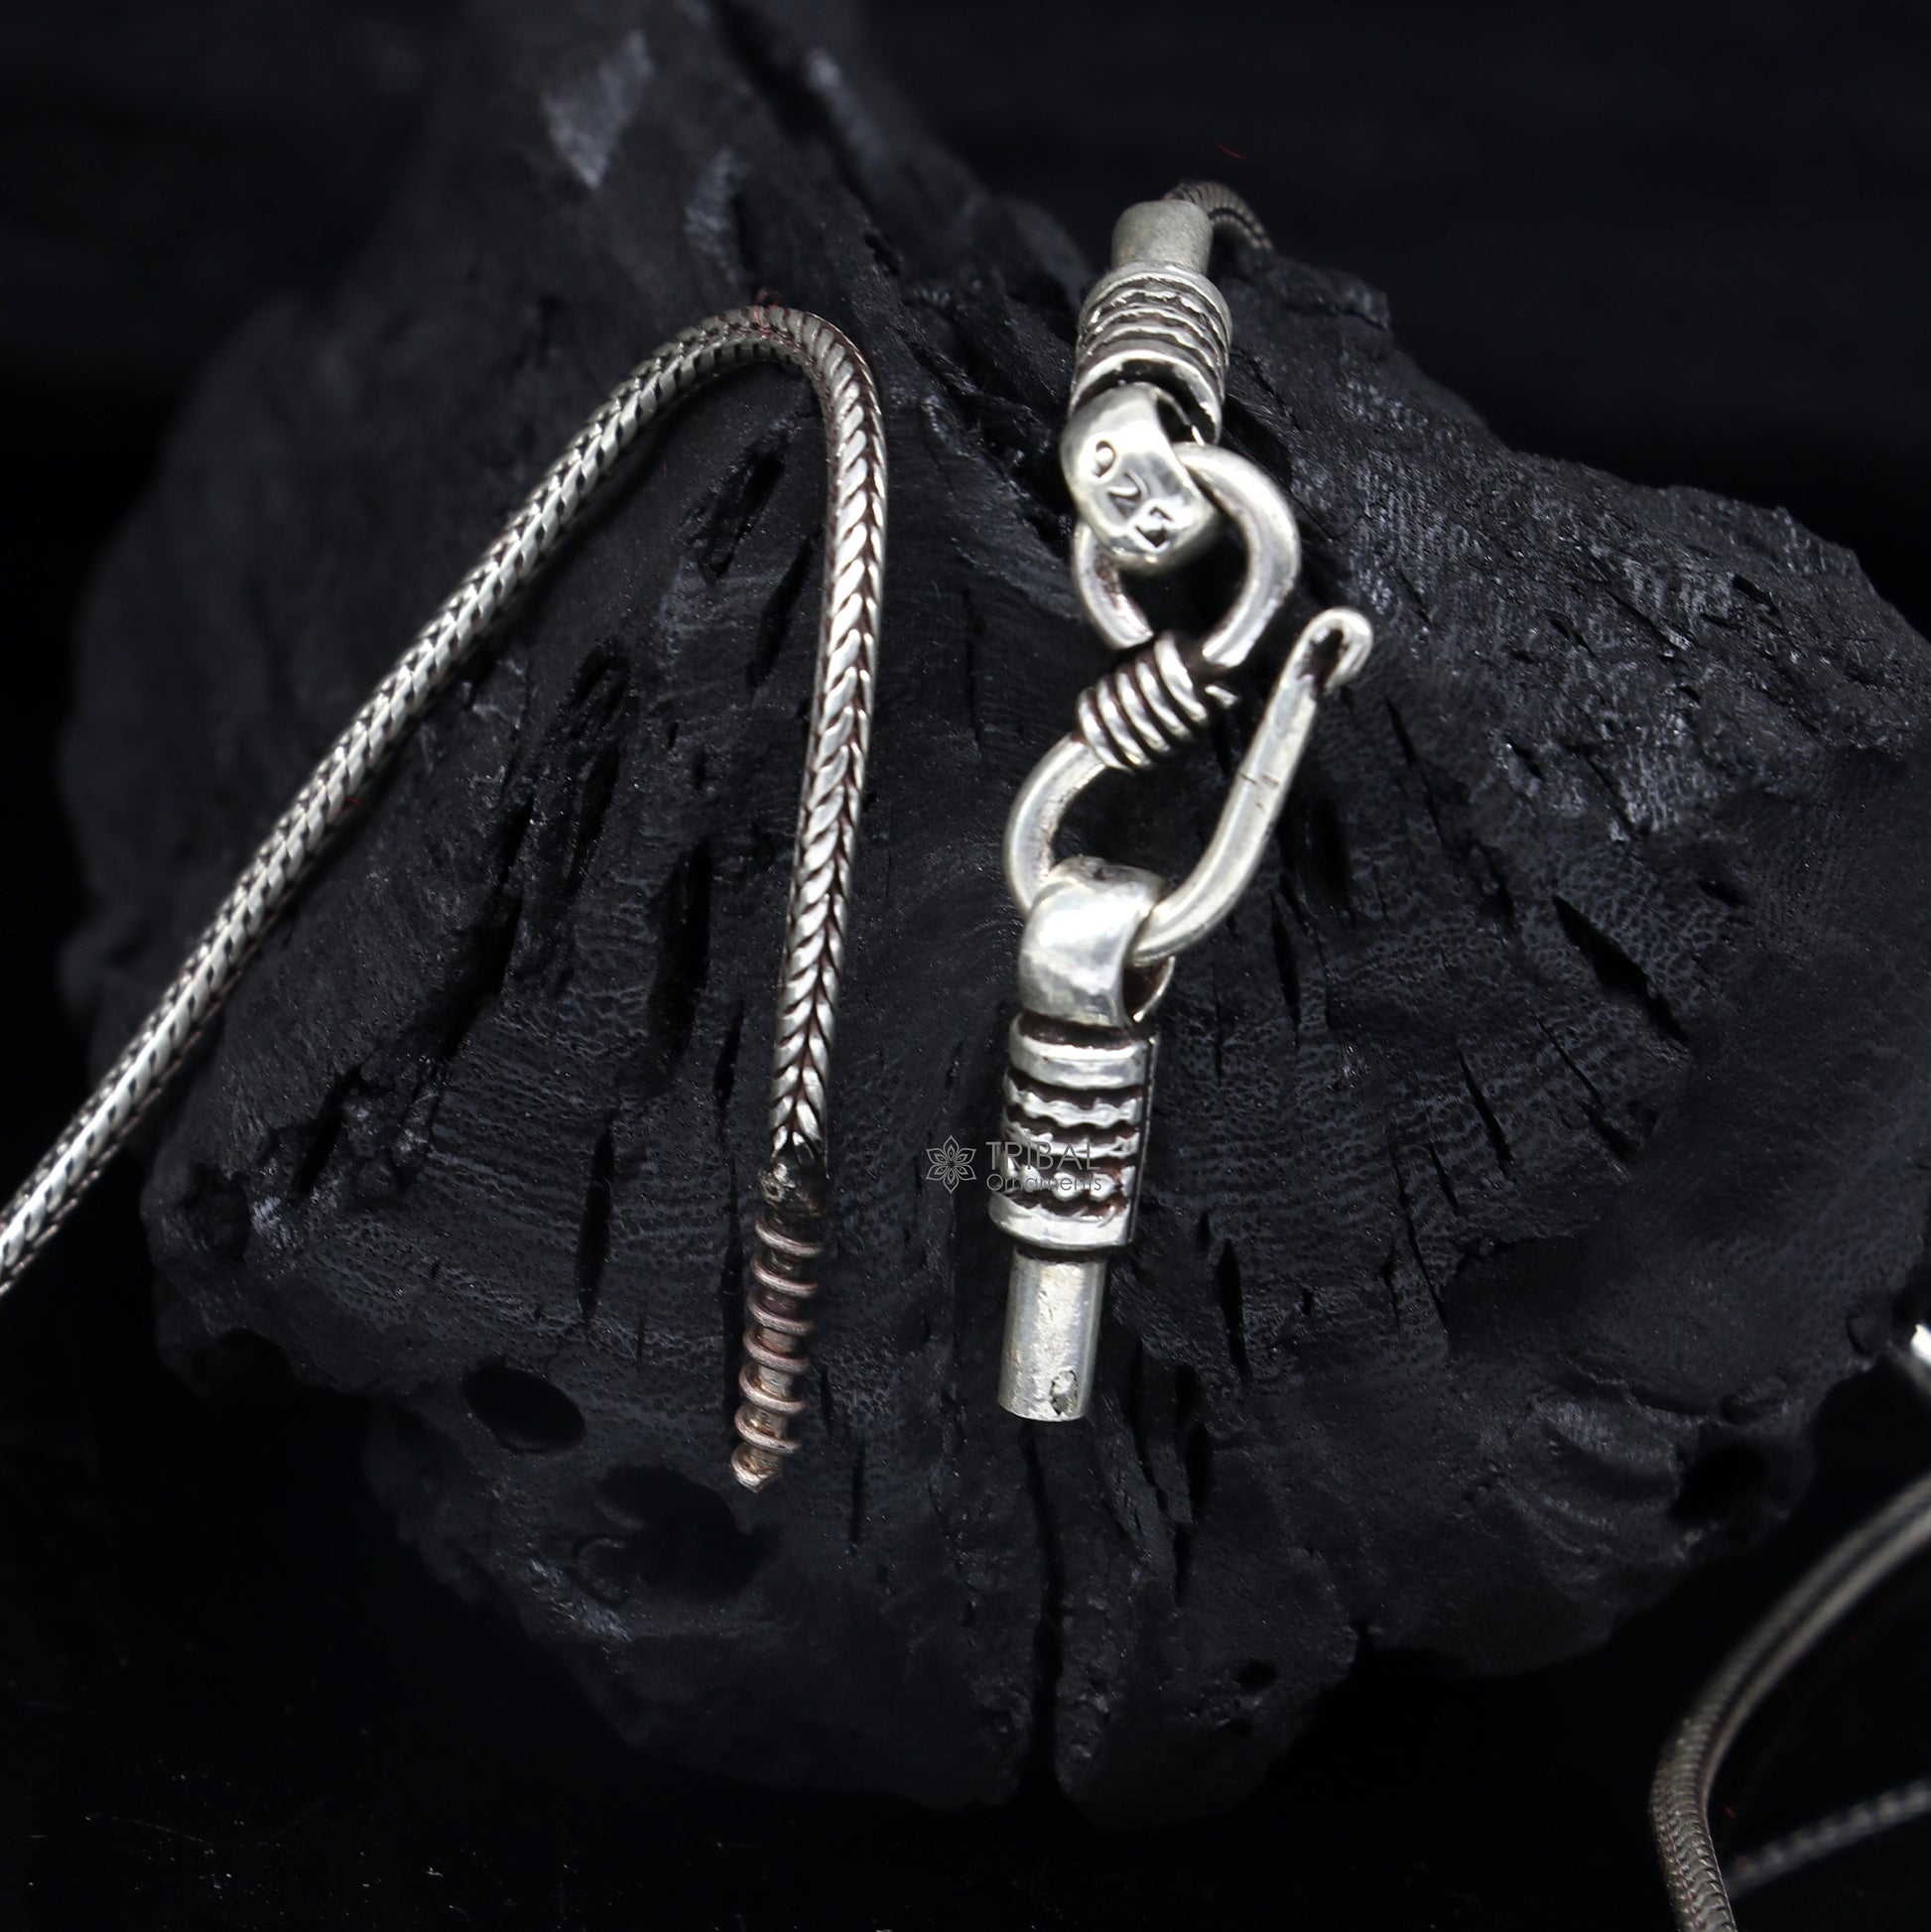 925 sterling silver handmade eagle design pendant, silver garuda pendant necklace best delicate unisex pendant jewellery nsp658 - TRIBAL ORNAMENTS